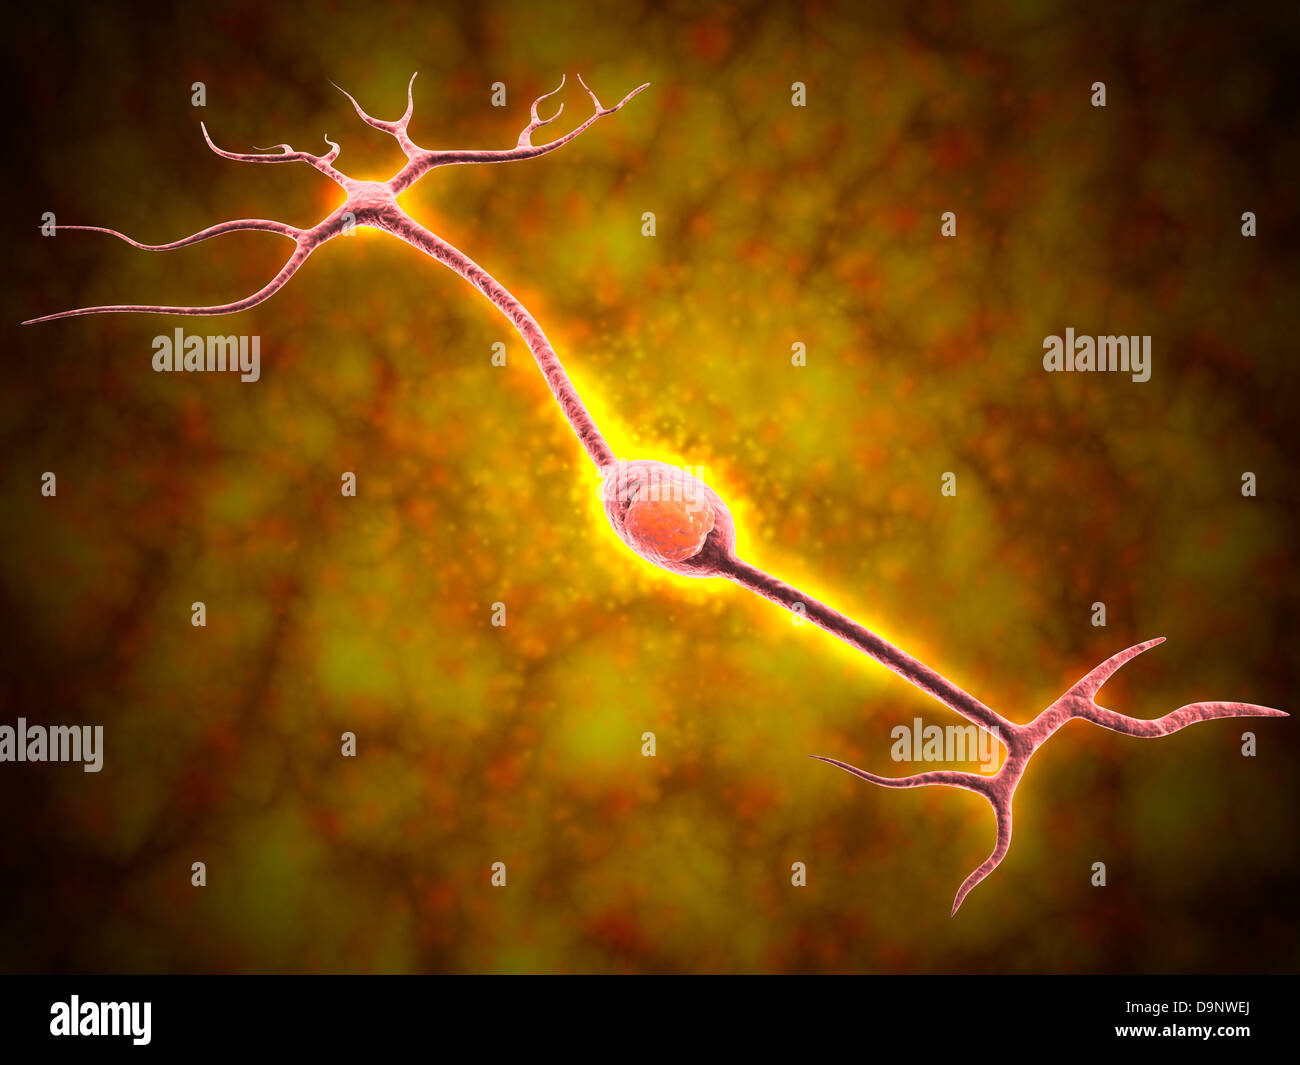 Microscopic view of a bipolar neuron Stock Photo